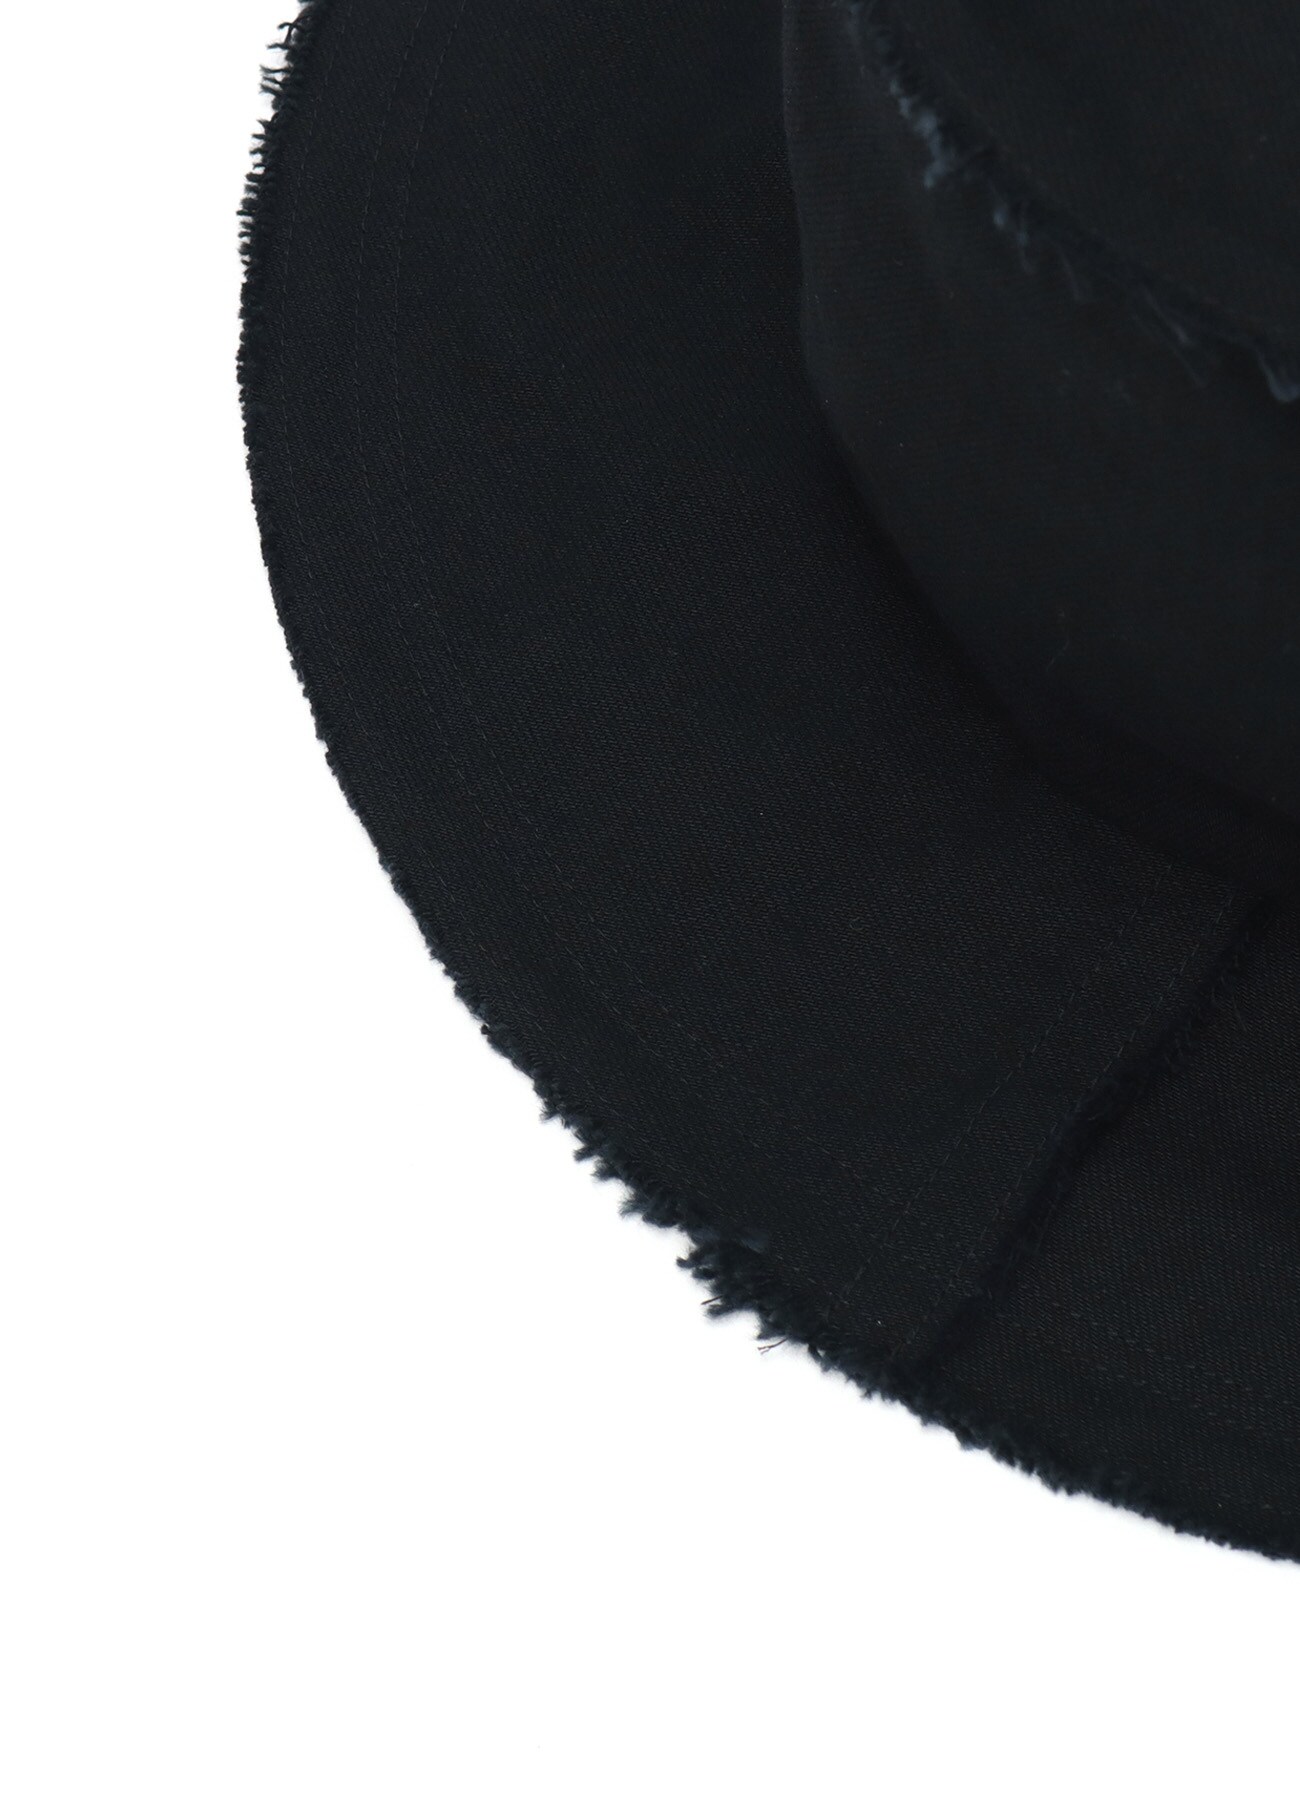 Black Denim Top Hat B